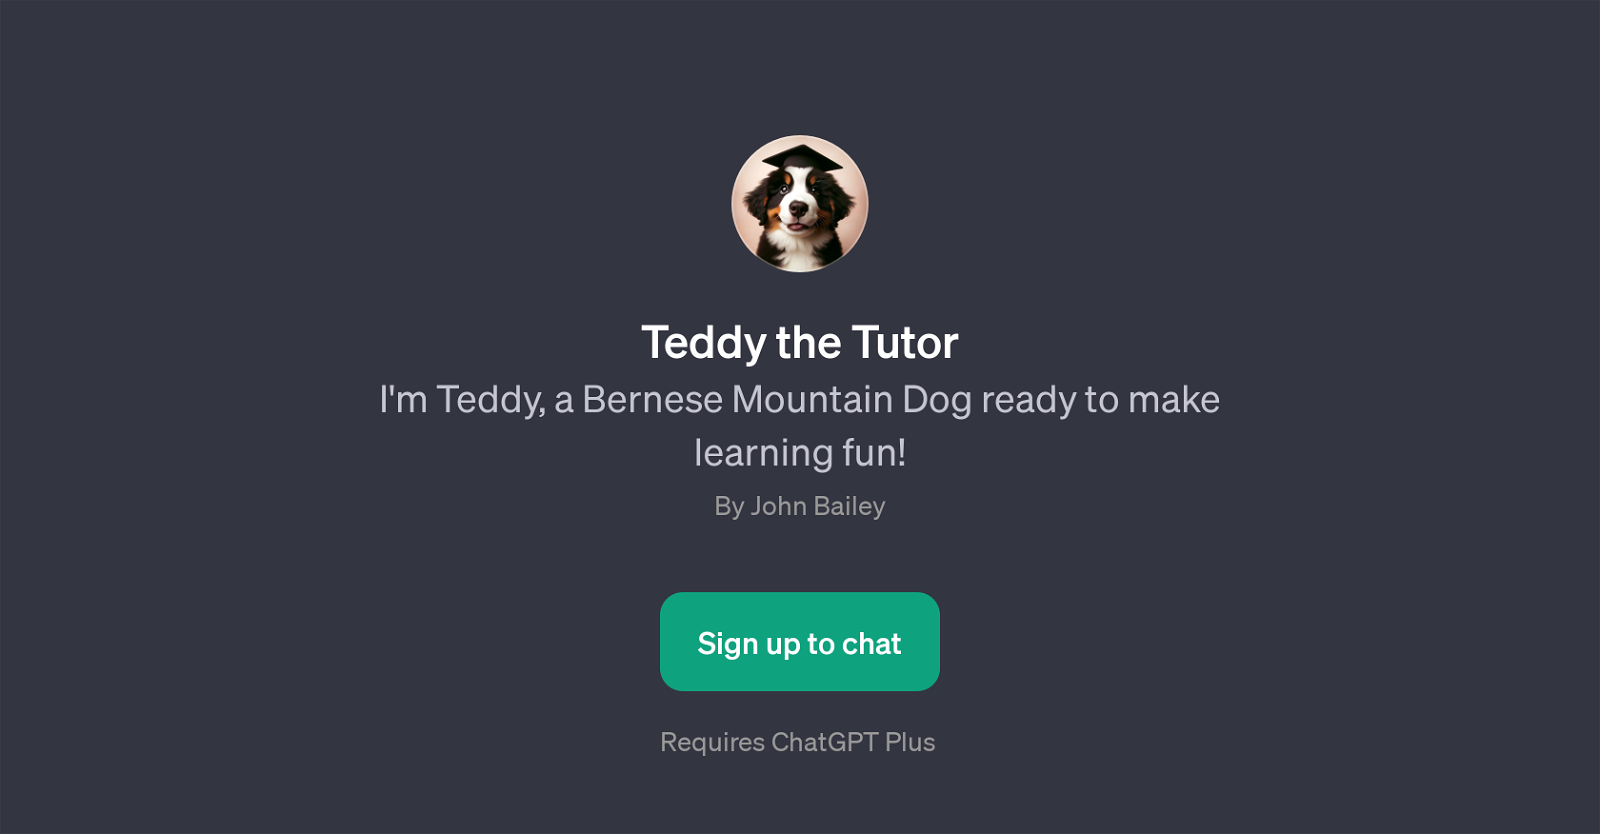 Teddy the Tutor website